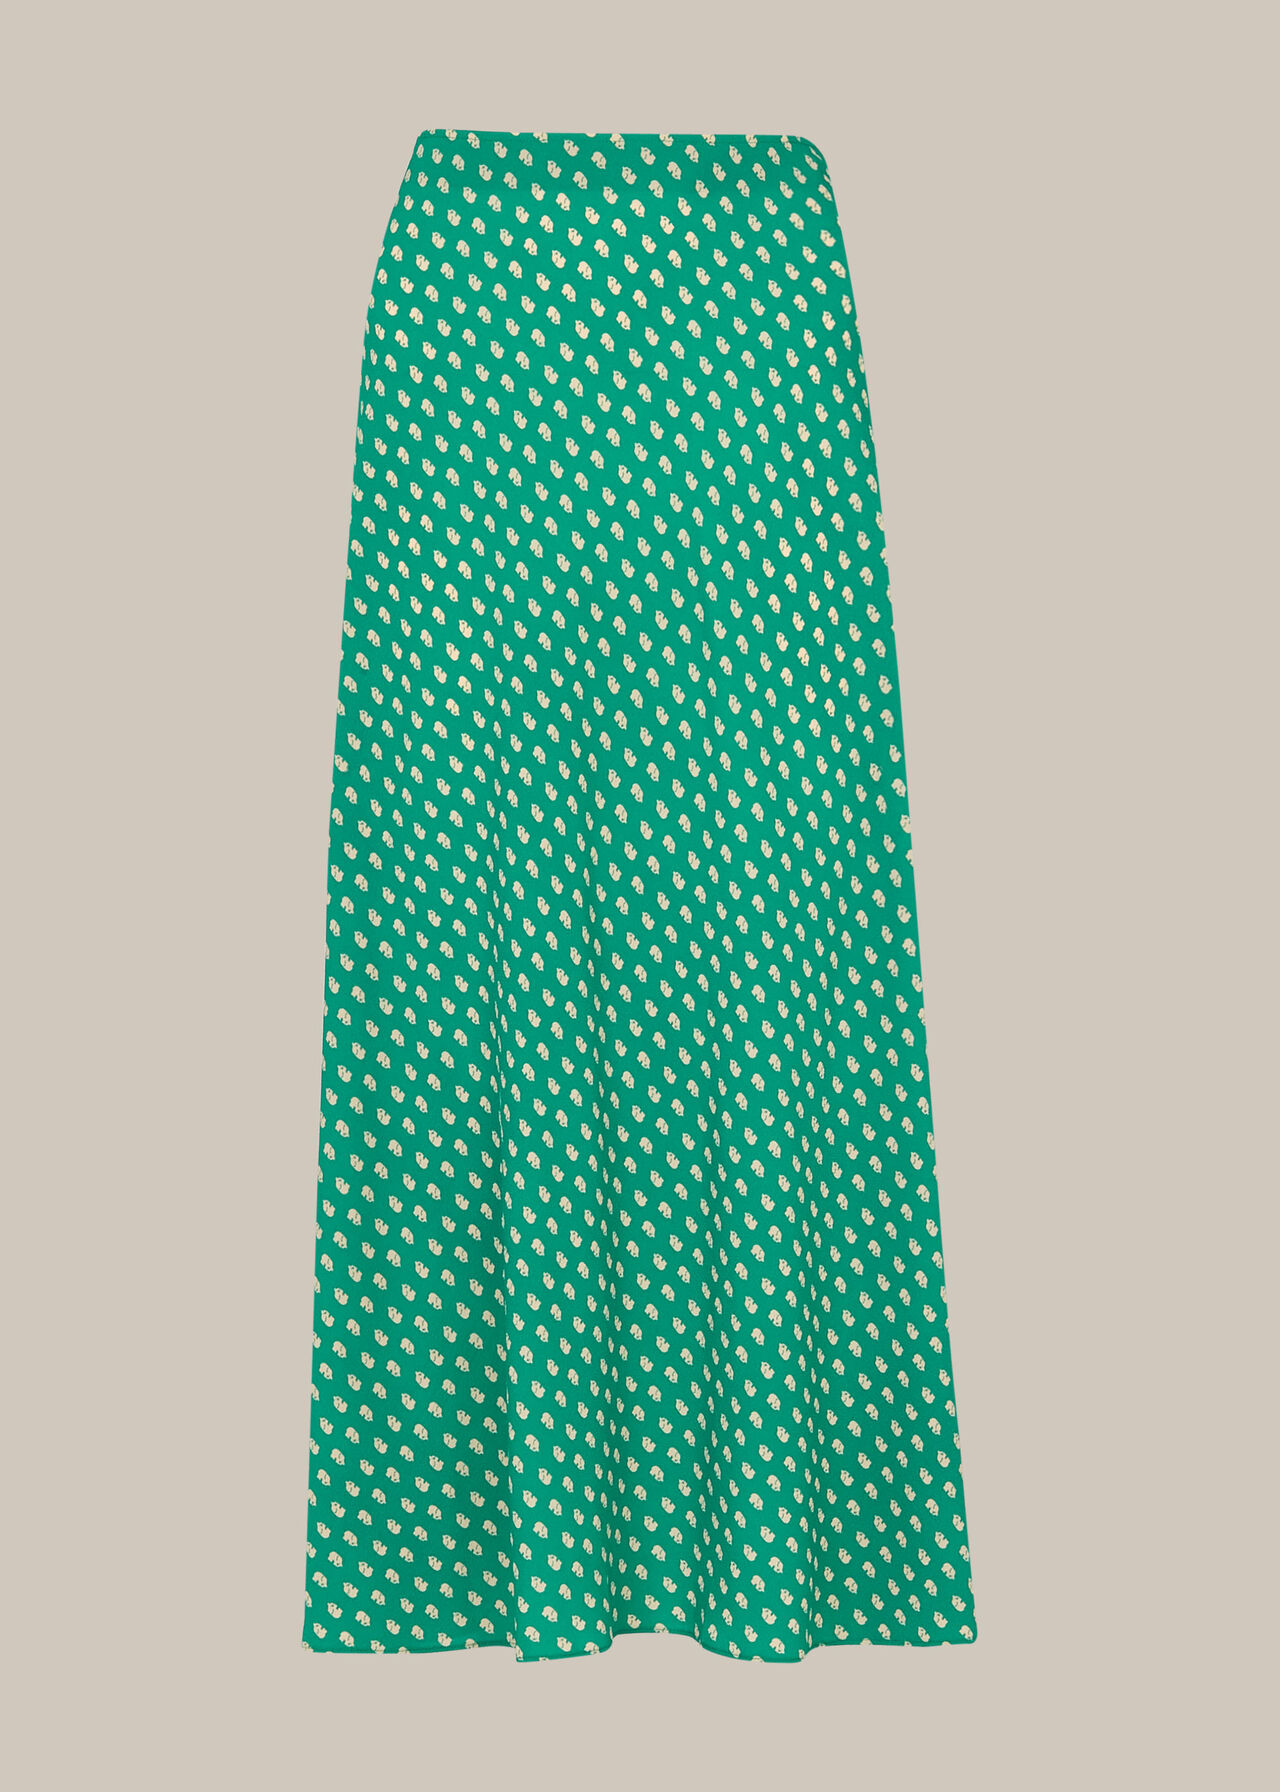 Elephant Print Bias Cut Skirt Green/Multi